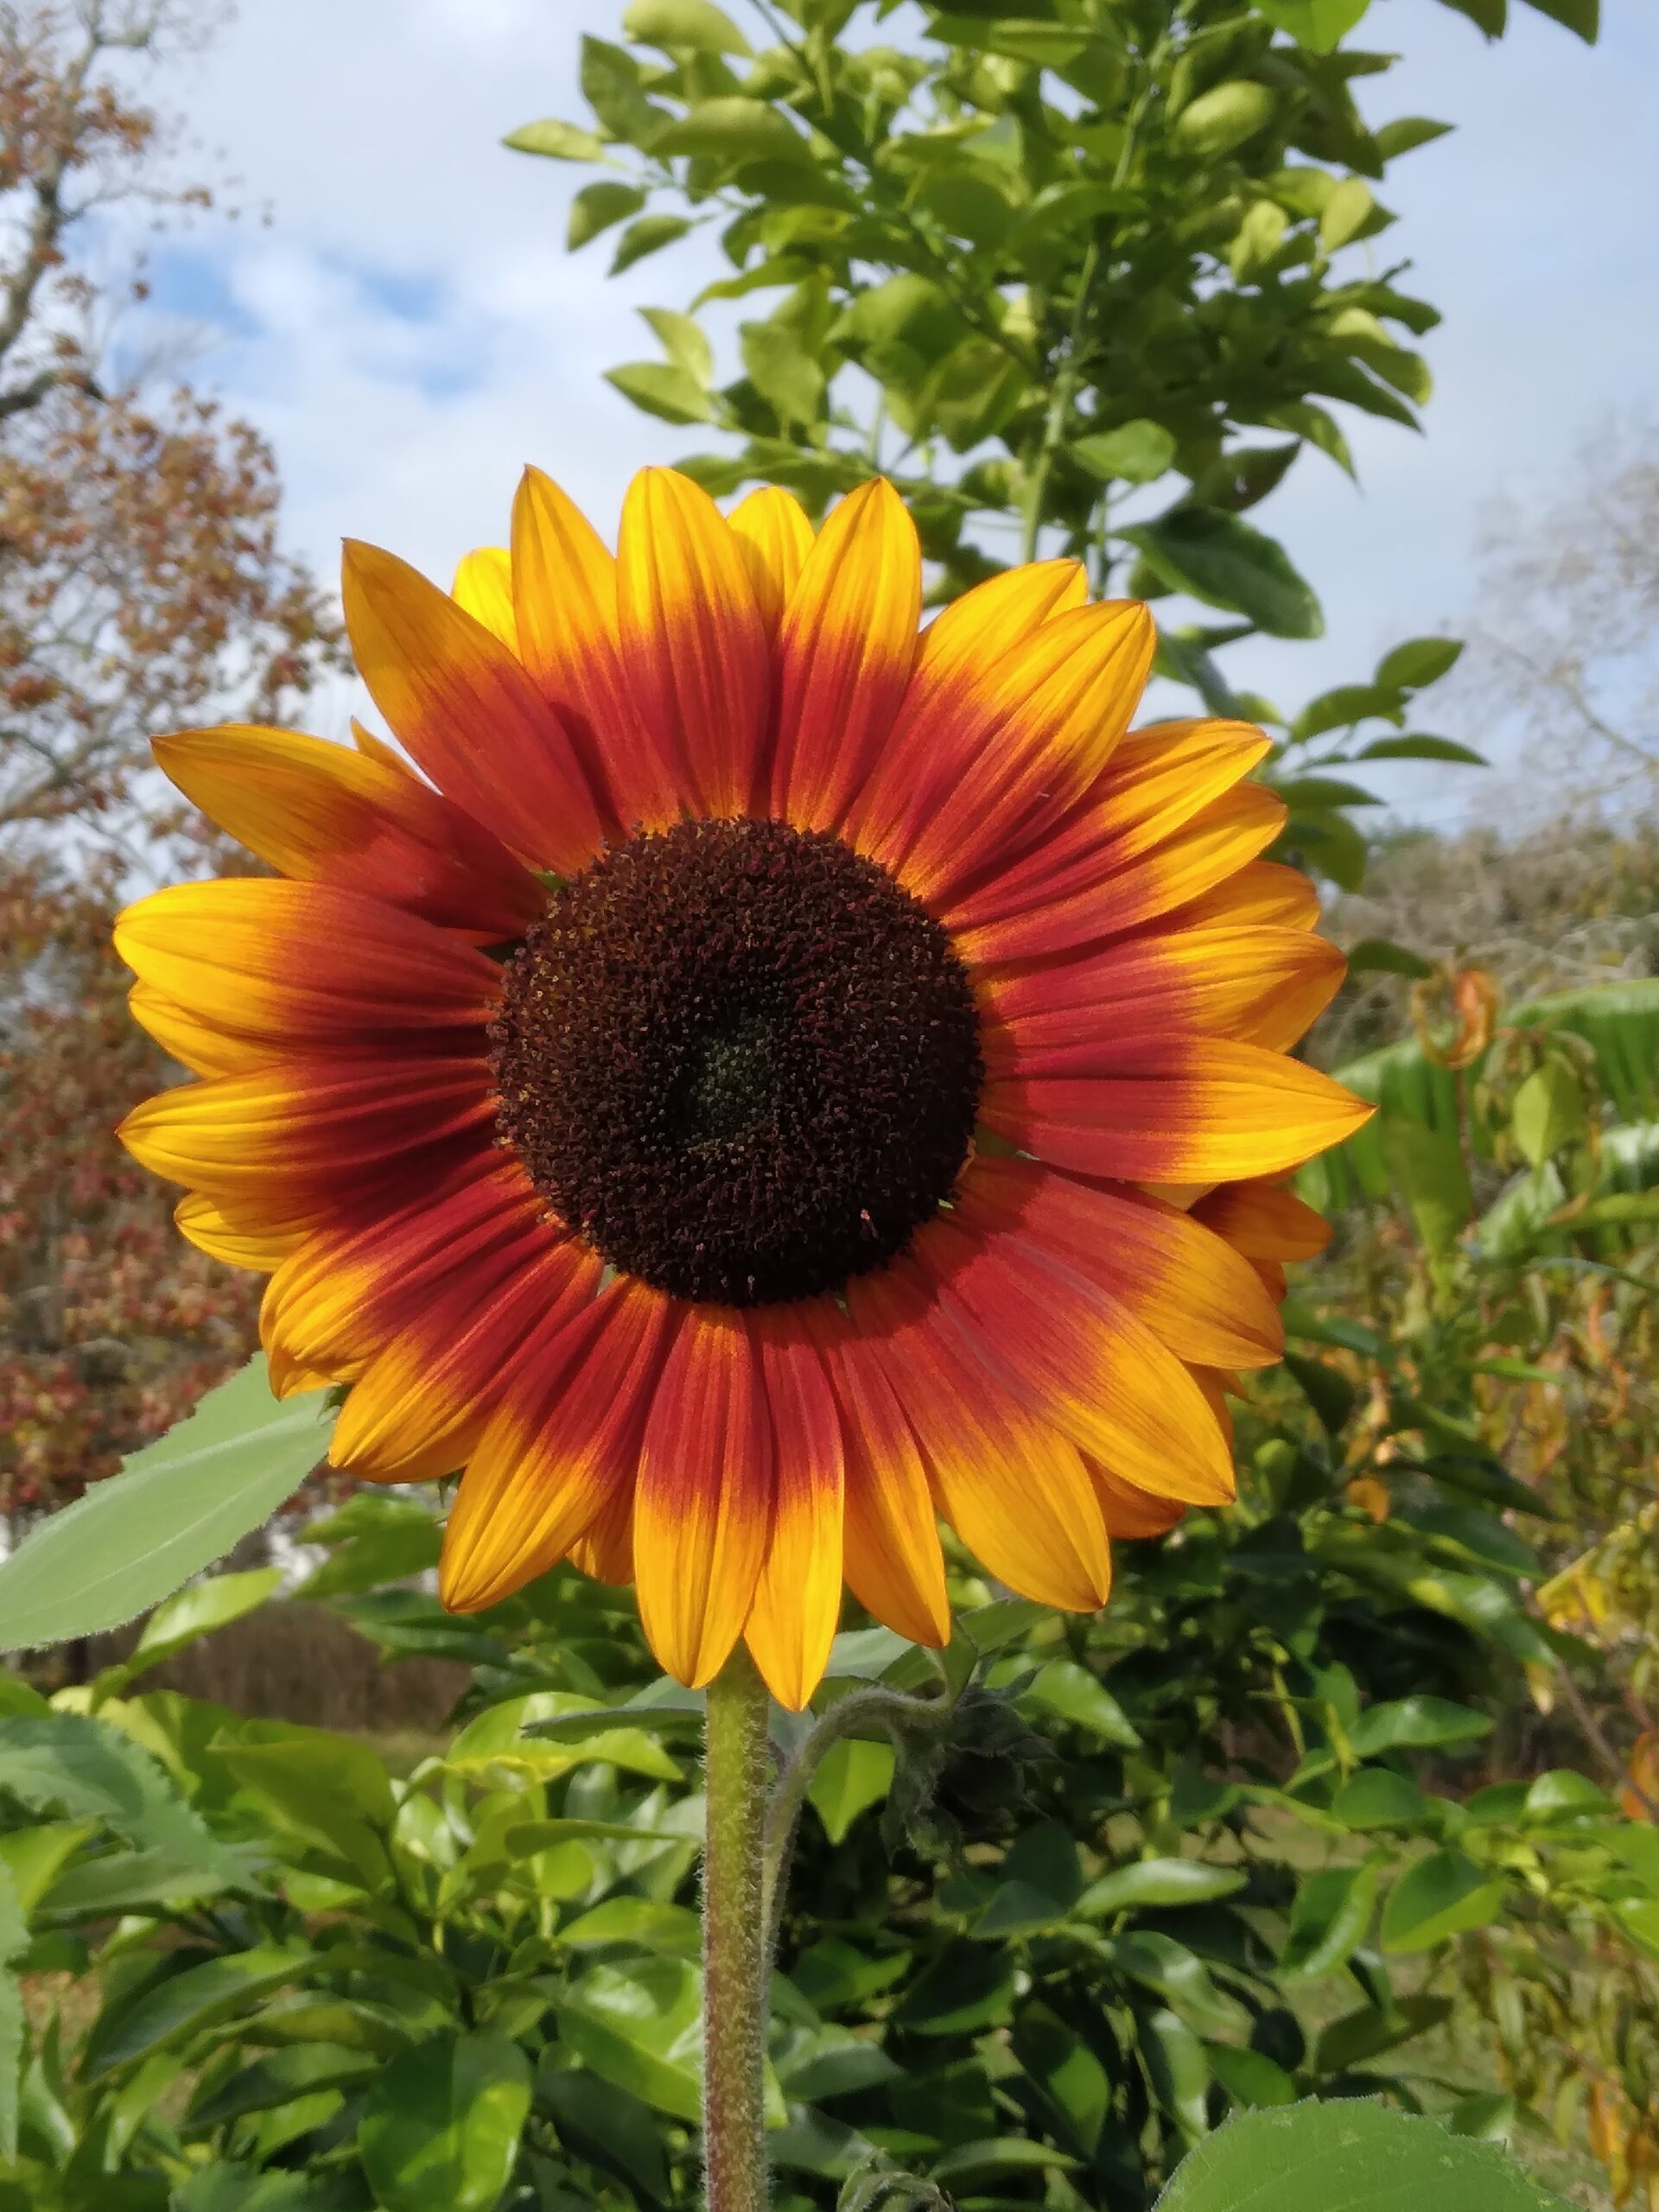 5 Reason To Grow Sunflowers This Spring